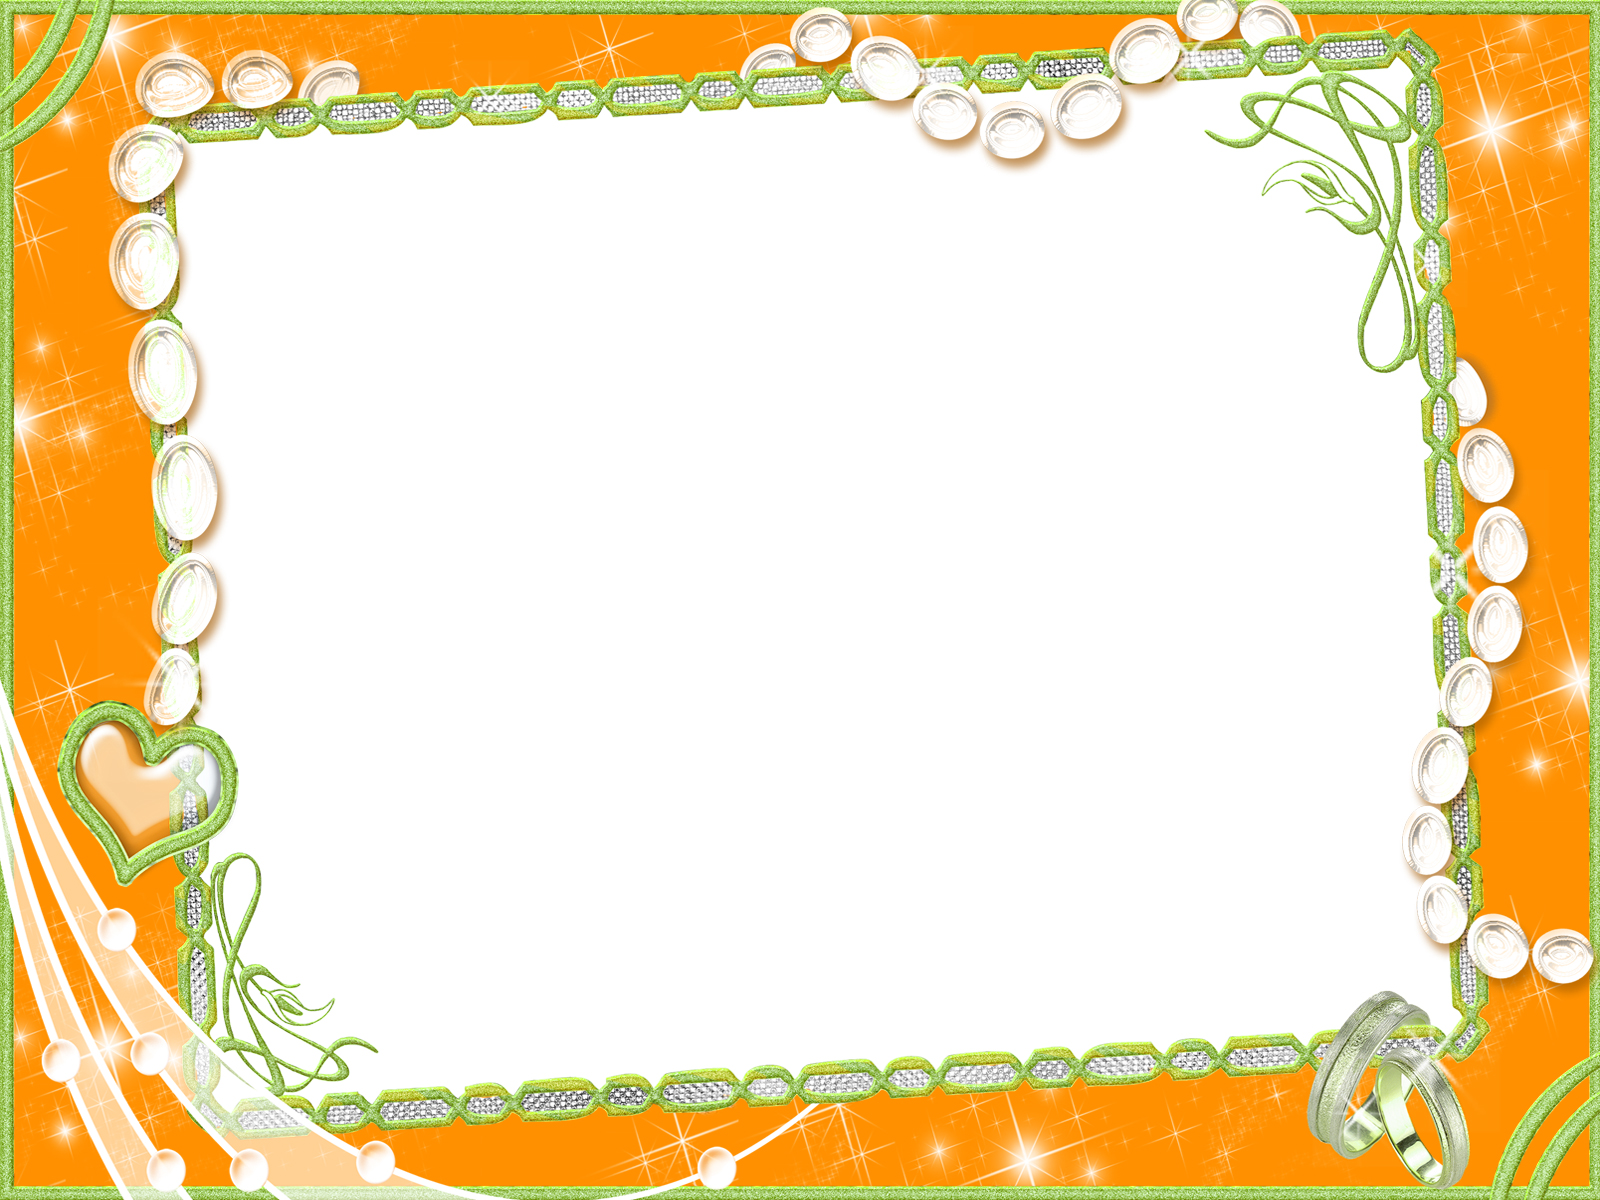 Orange Photo Frame Background Wallpaper For Powerpoint Presentations